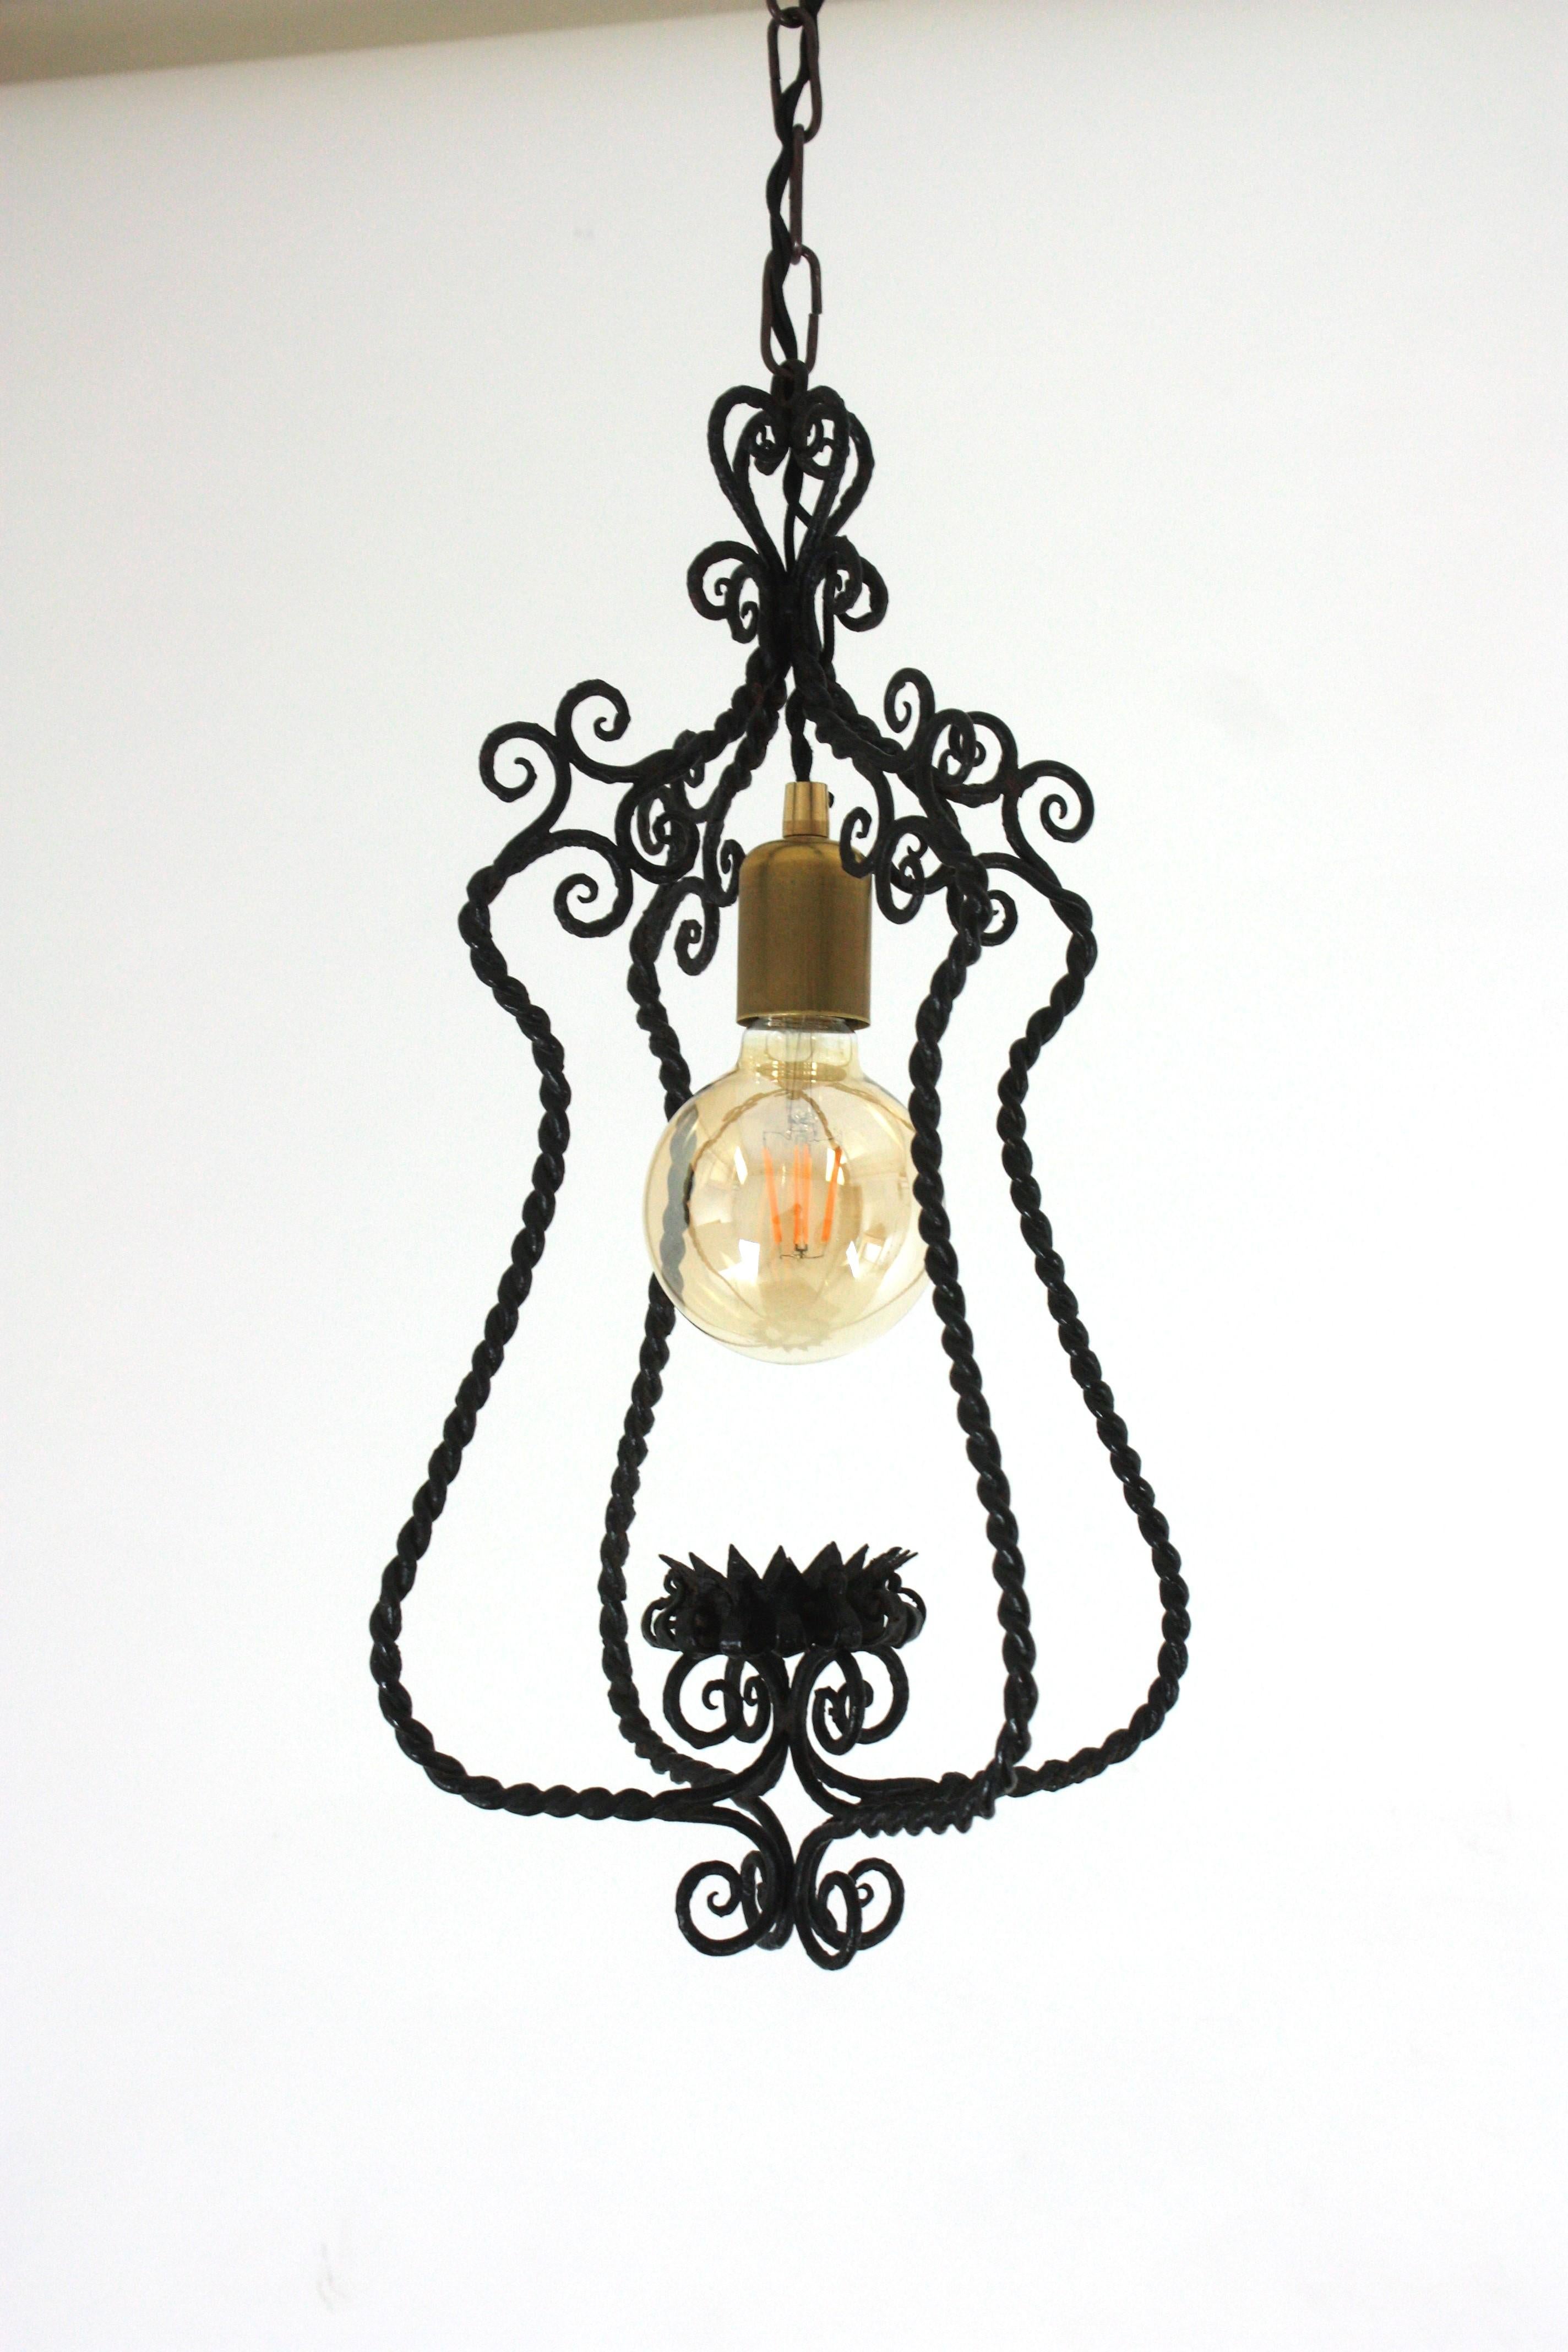 Spanish Lantern Pendant Lamp in Wrought Iron, Scroll Twisting Design, 1940s For Sale 2